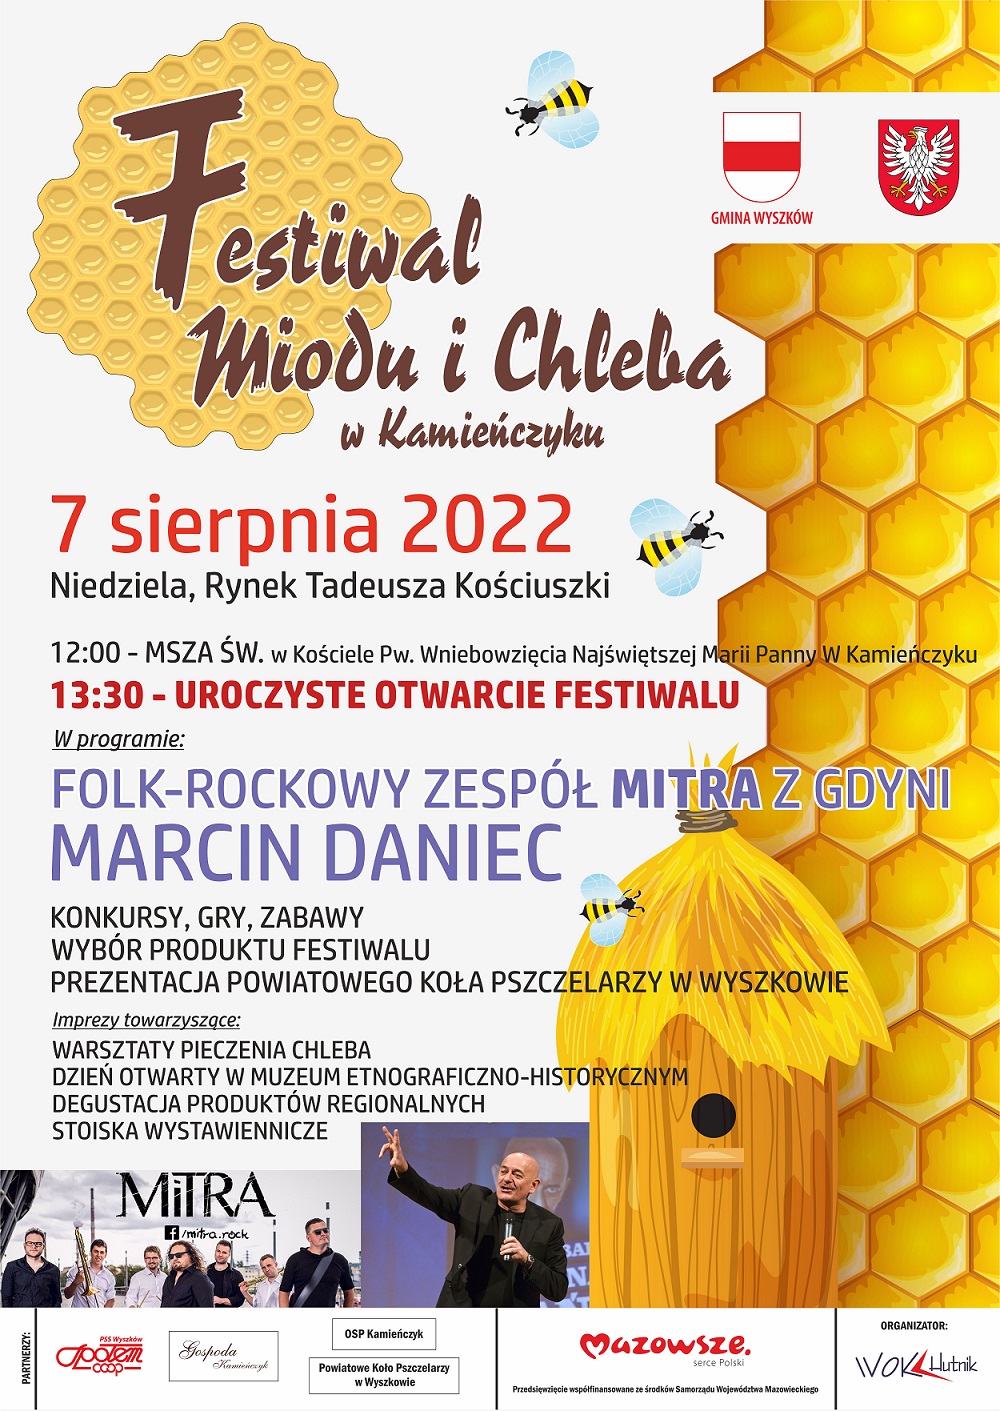 festiwal_miodu_i_chleba_2022_02.jpg (502 KB)